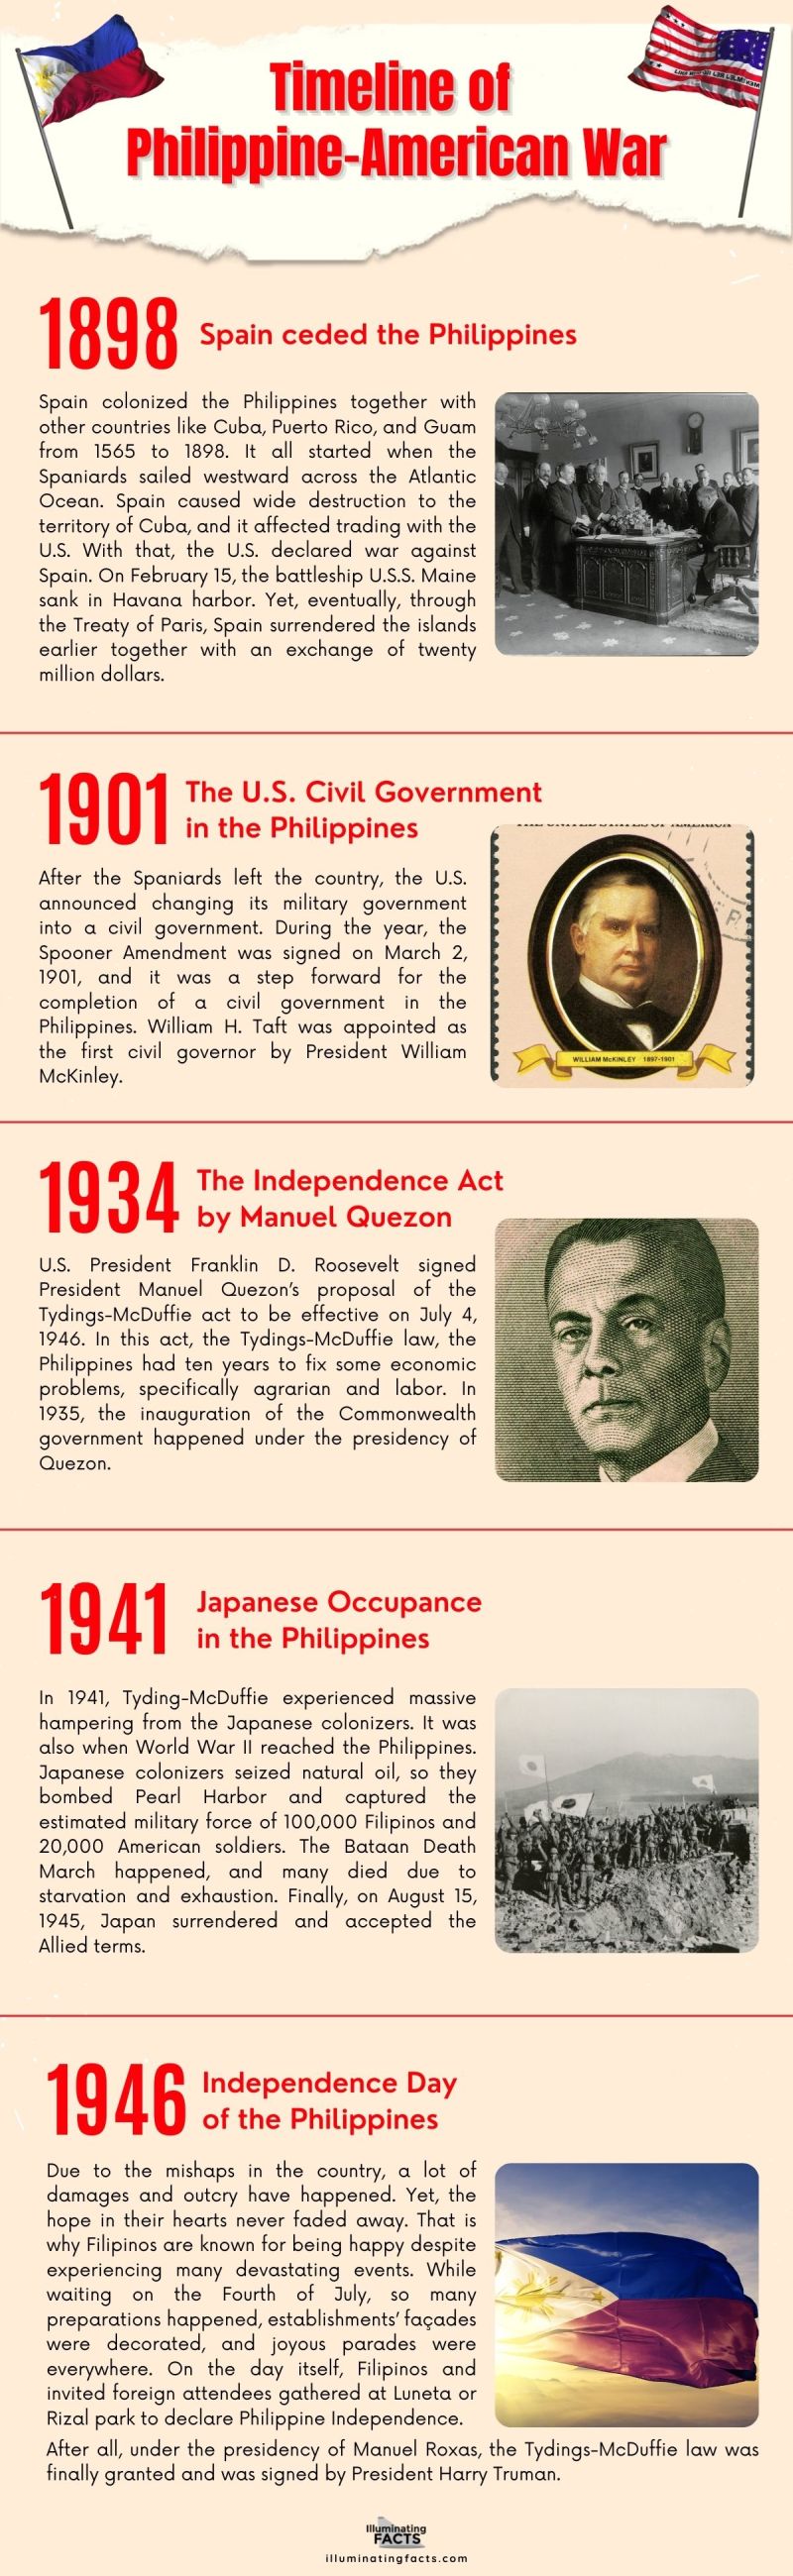 Timeline of Philippine-American War